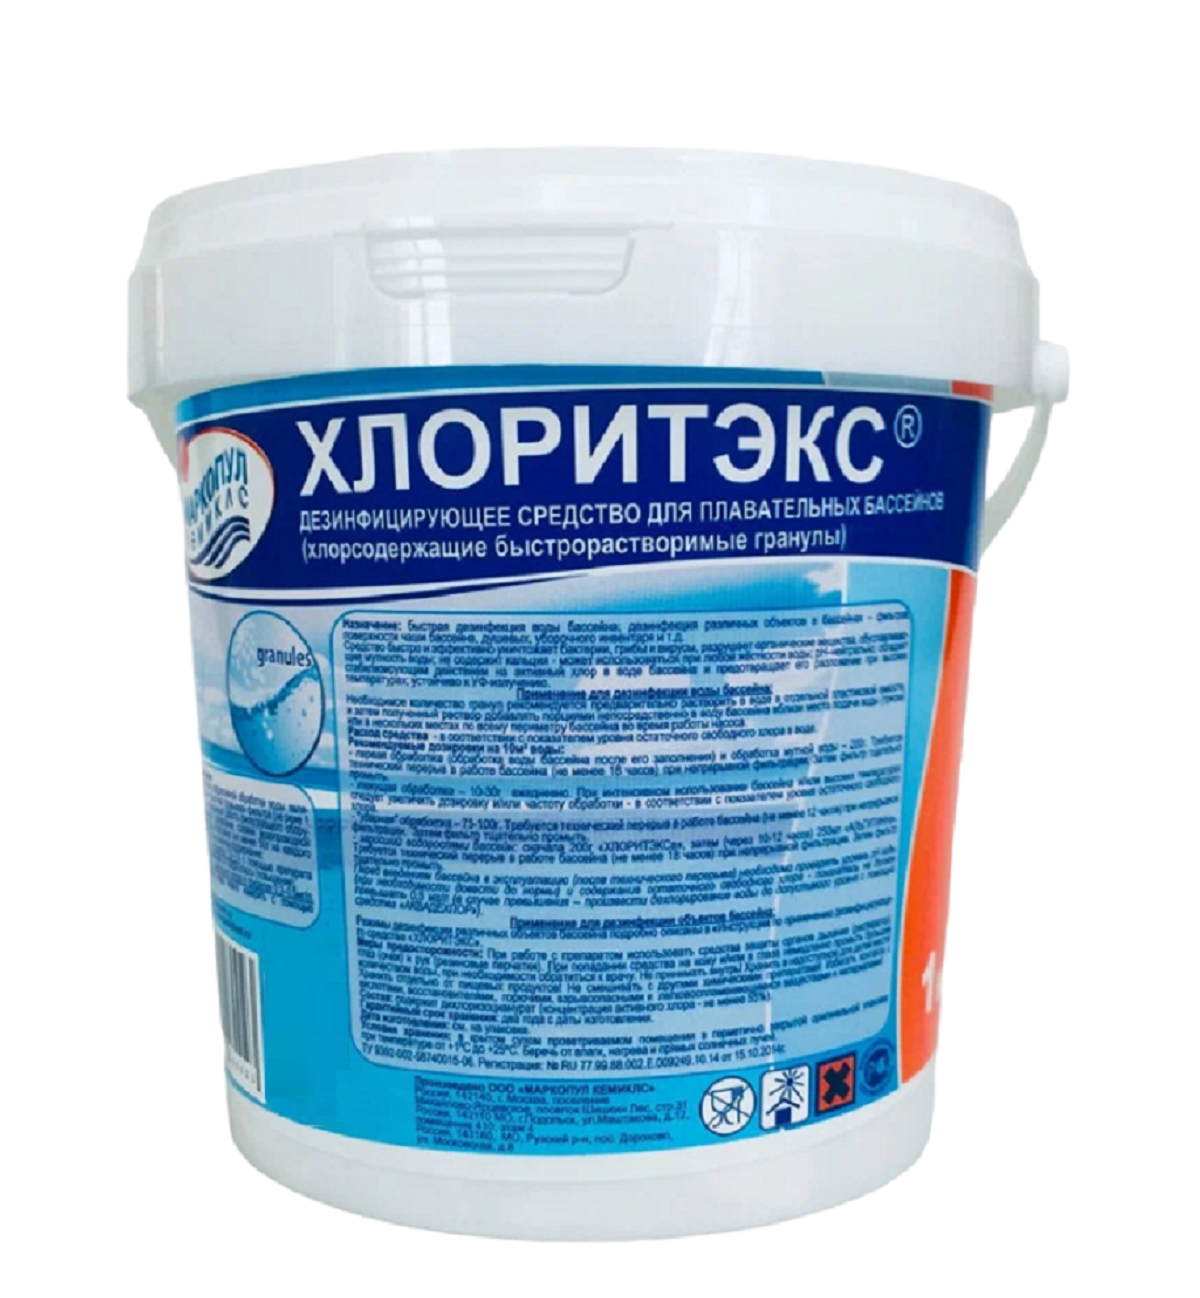 Хлор для бассейна Хлоритэкс 1 кг, гранулы для очистки воды Маркопул кемиклс